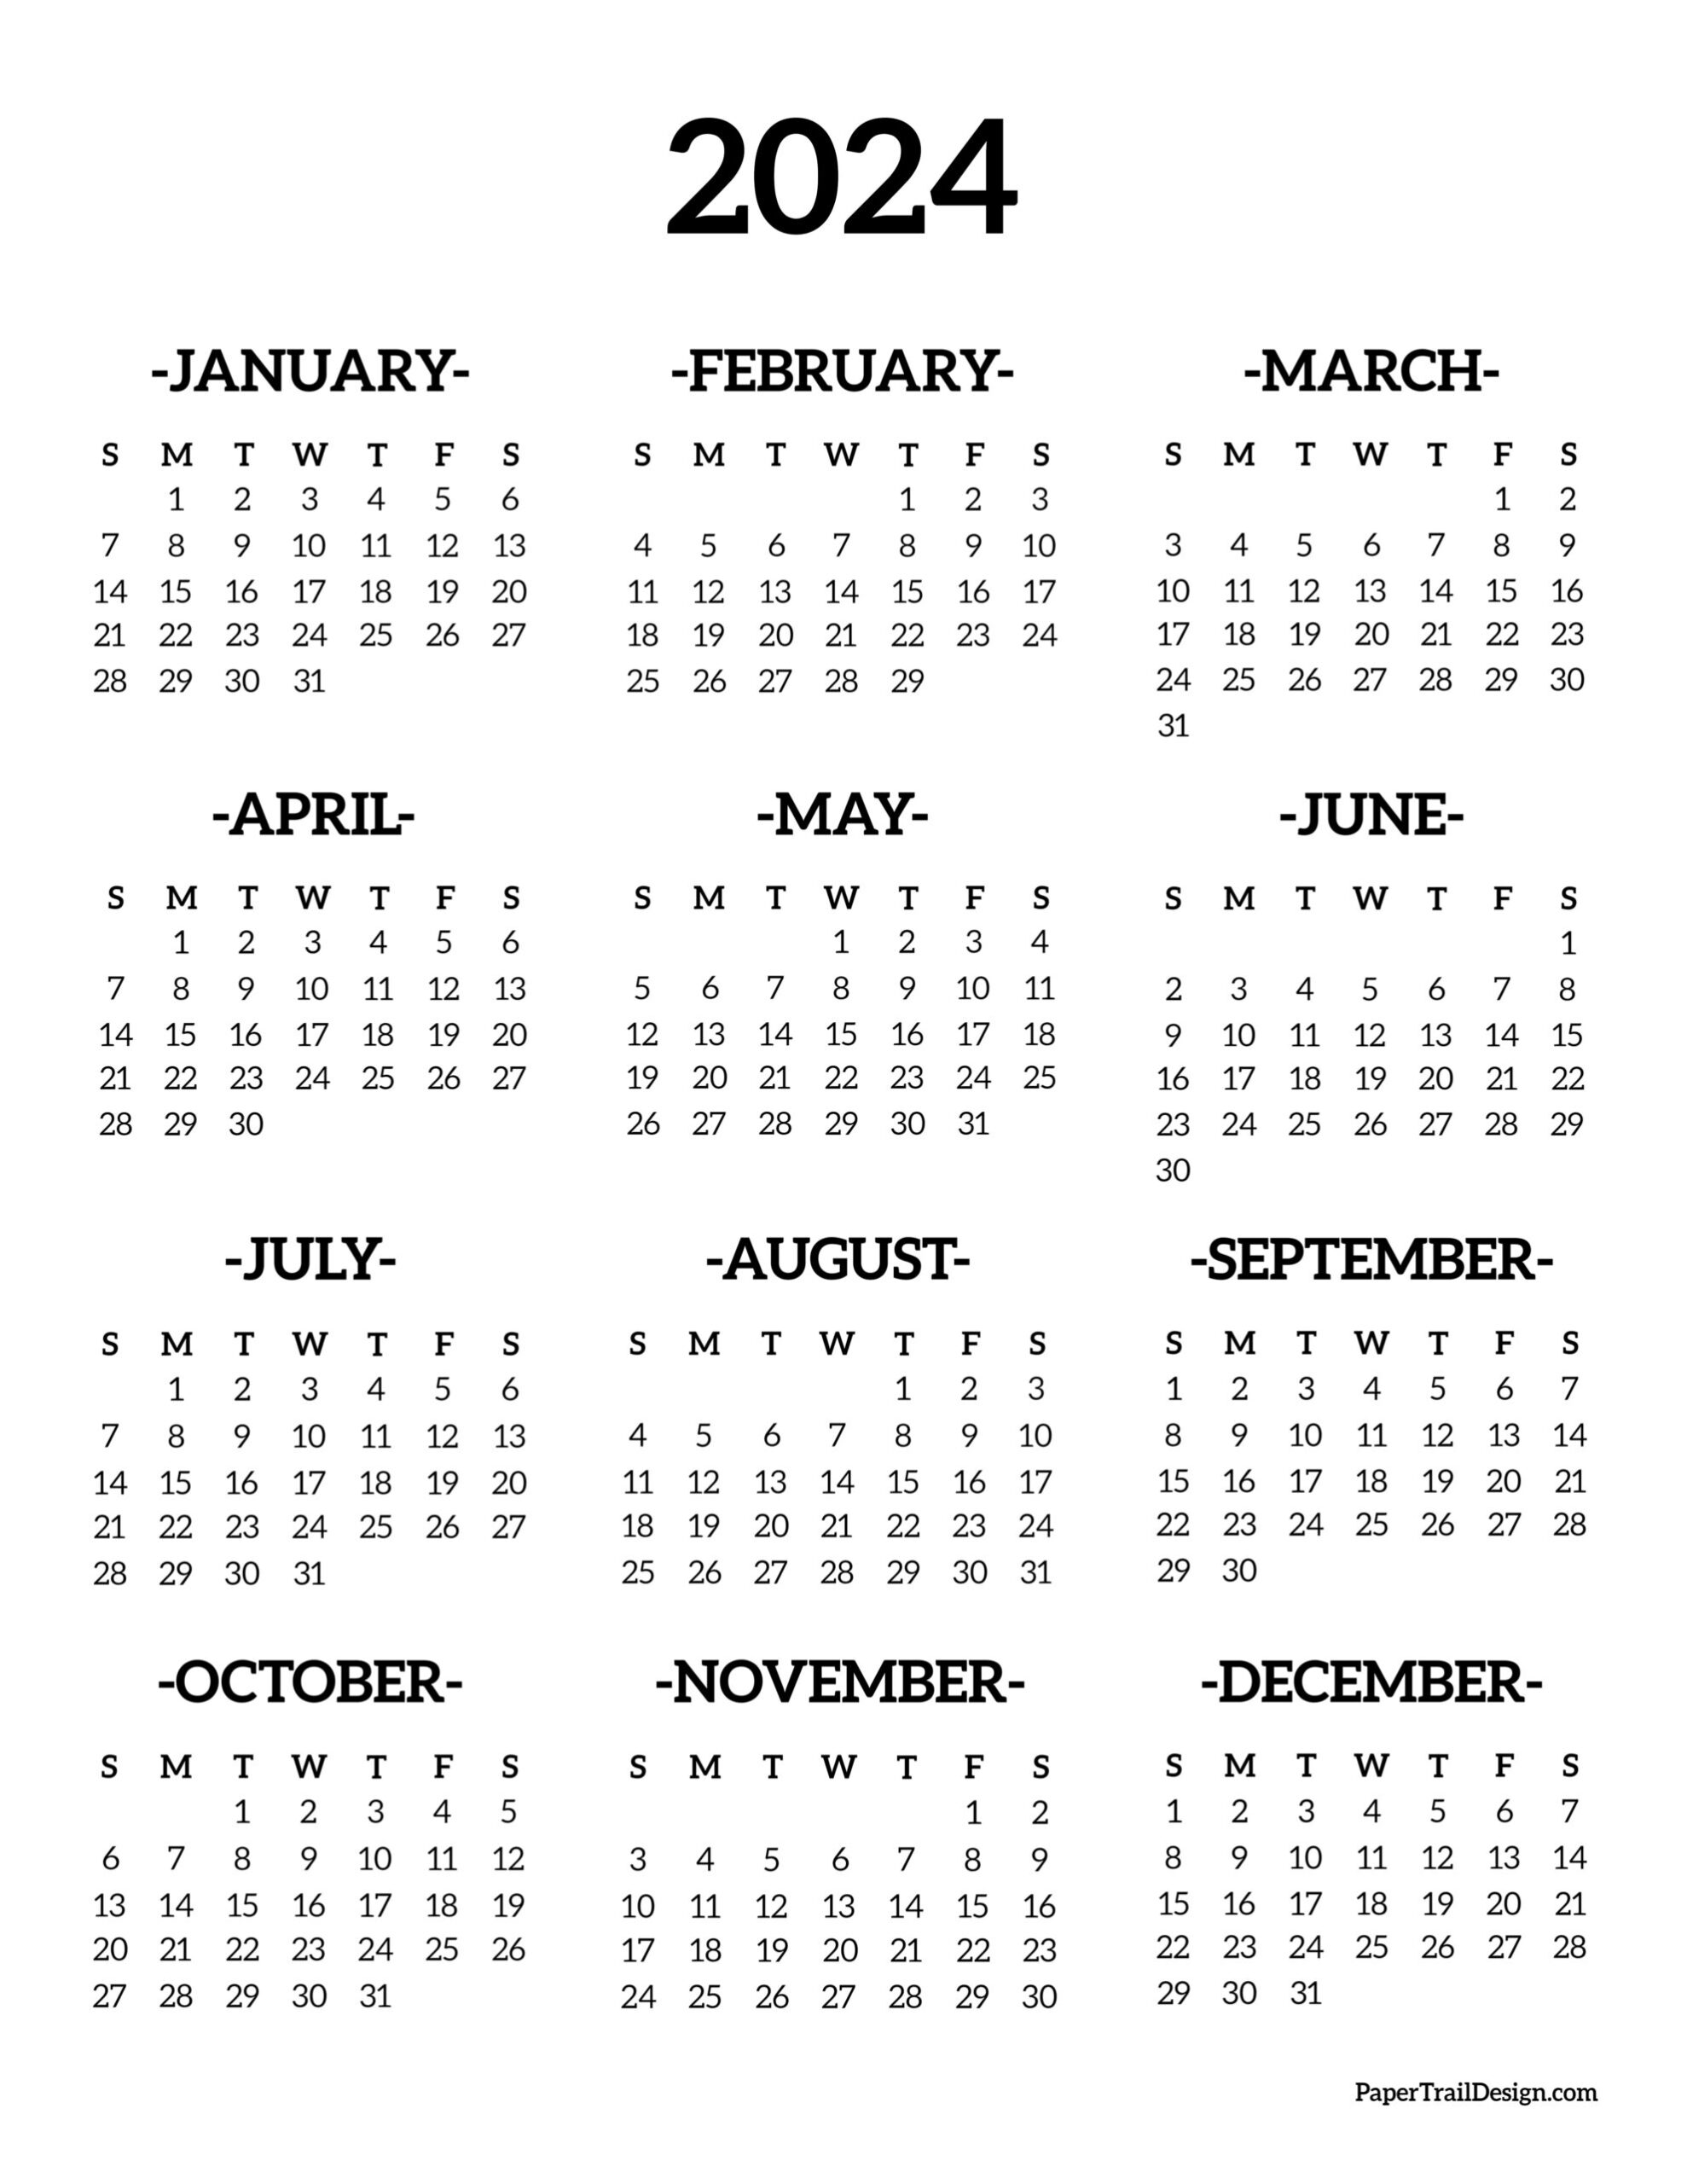 Calendar 2024 Printable One Page - Paper Trail Design for Free-Printable-Calendar 2024